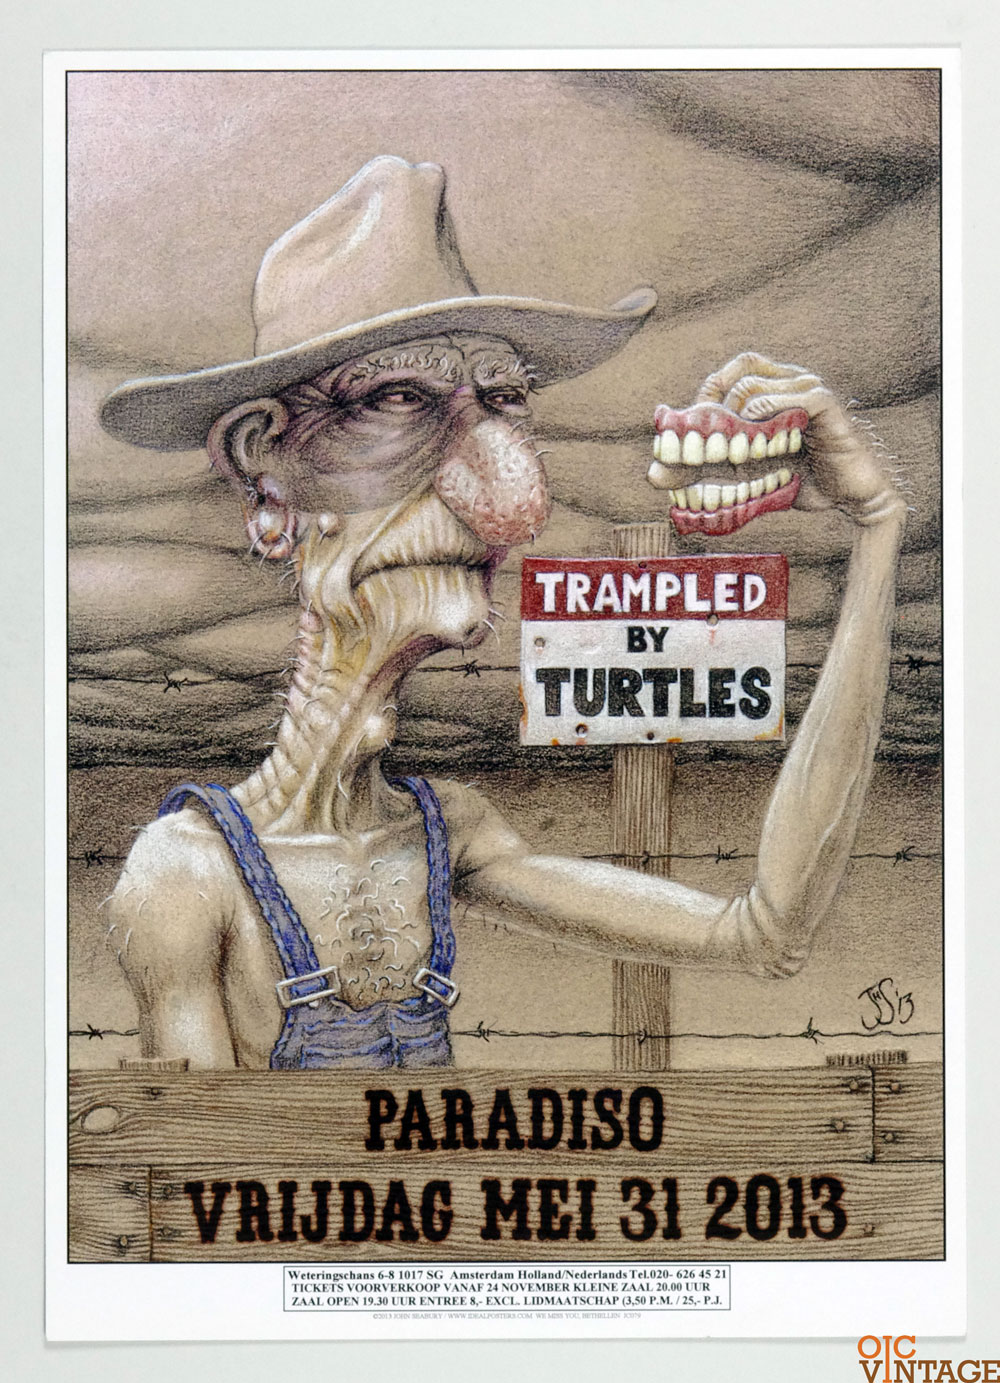 Trampled by Turtles Poster 2013 May 31 Paradiso Amsterdam John Seabury